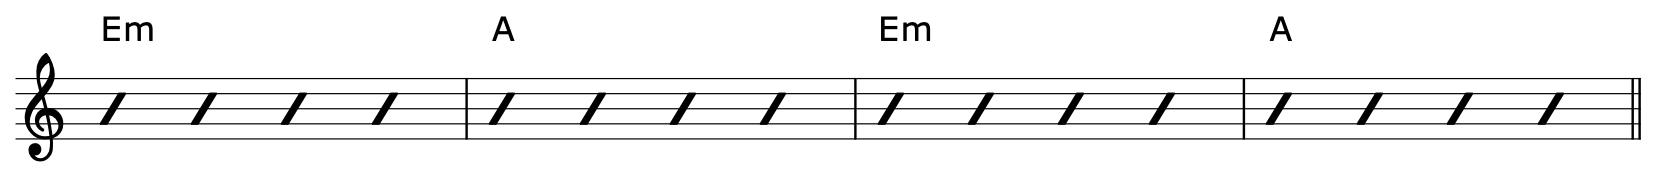 Dorian-Progression-Song-Example-1-2